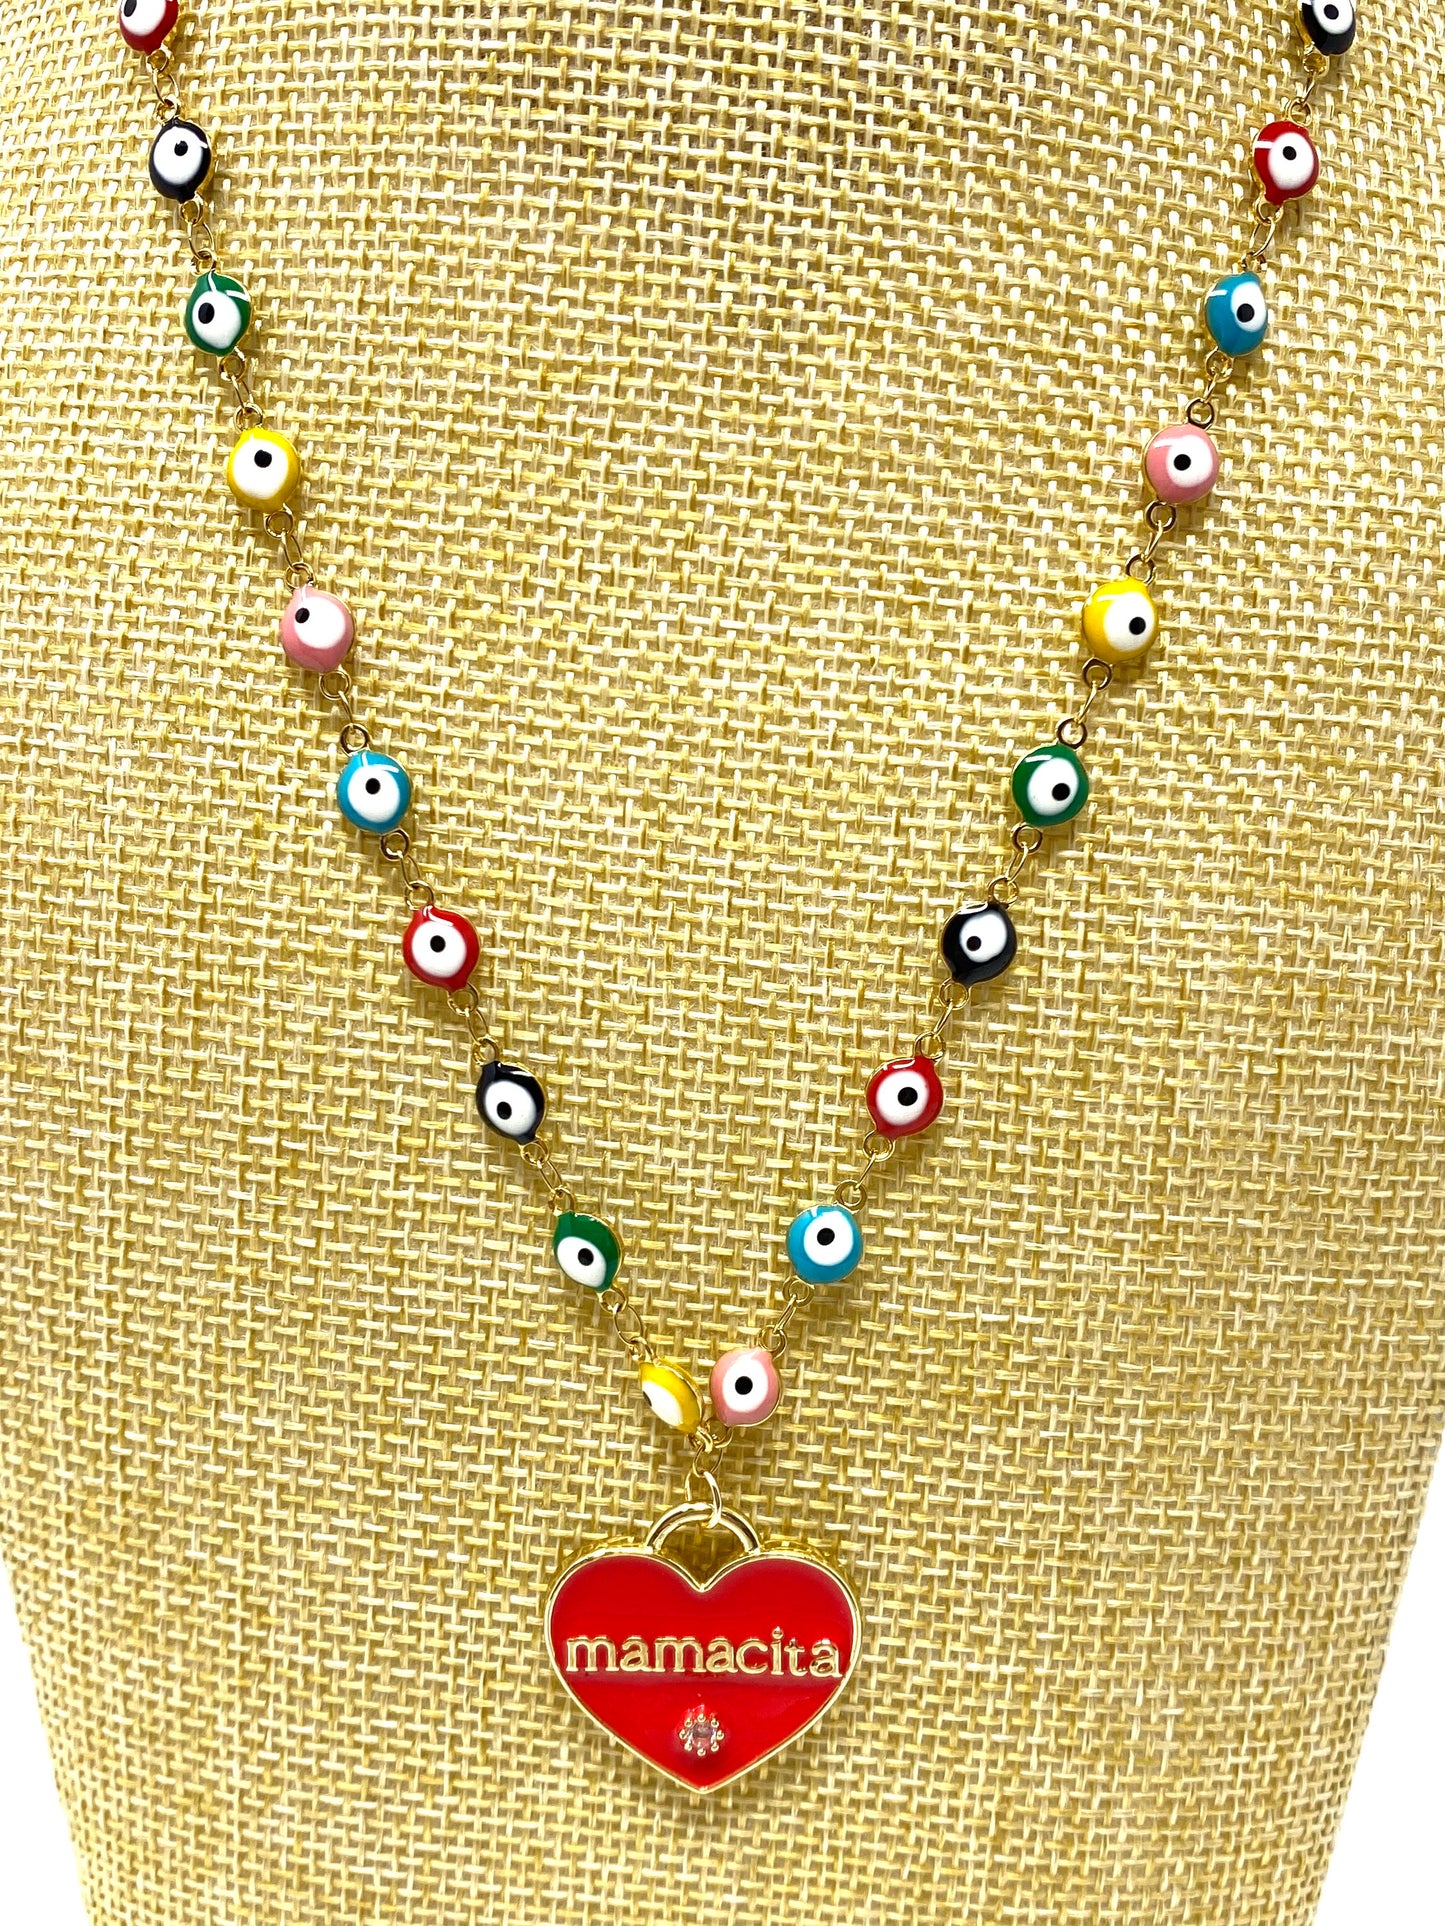 Red Enamel Heart "mamacita" Pendant on Enamel Evil Eye Chain Necklace